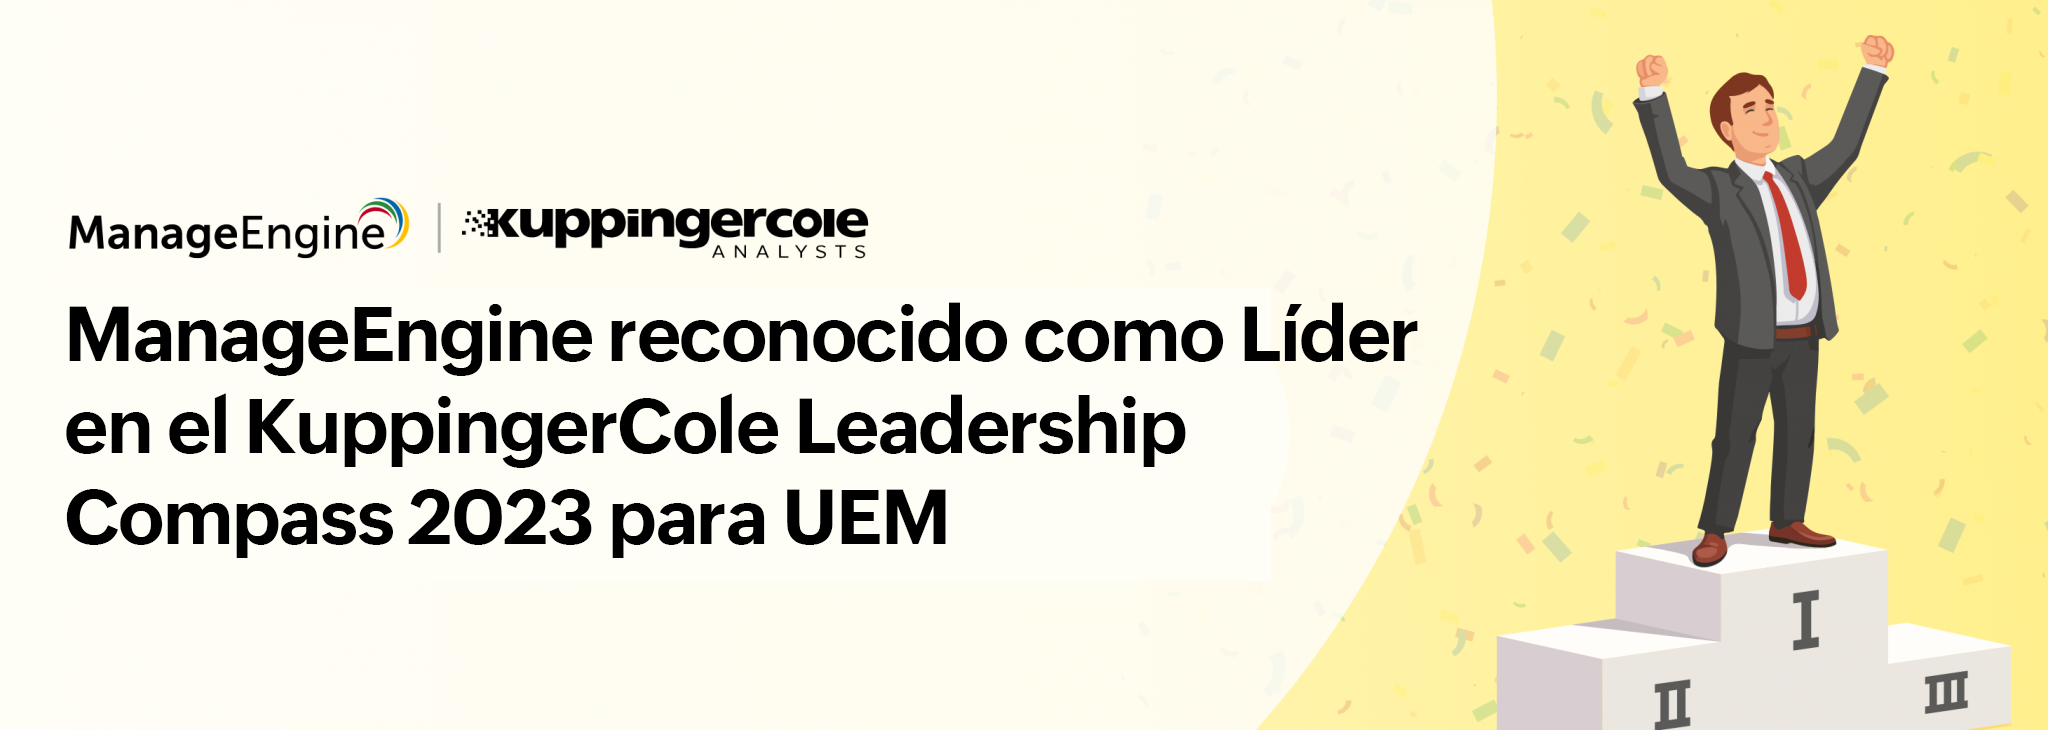 ManageEngine reconocido líder general para UEM en KuppingerCole Leadership Compass 2023